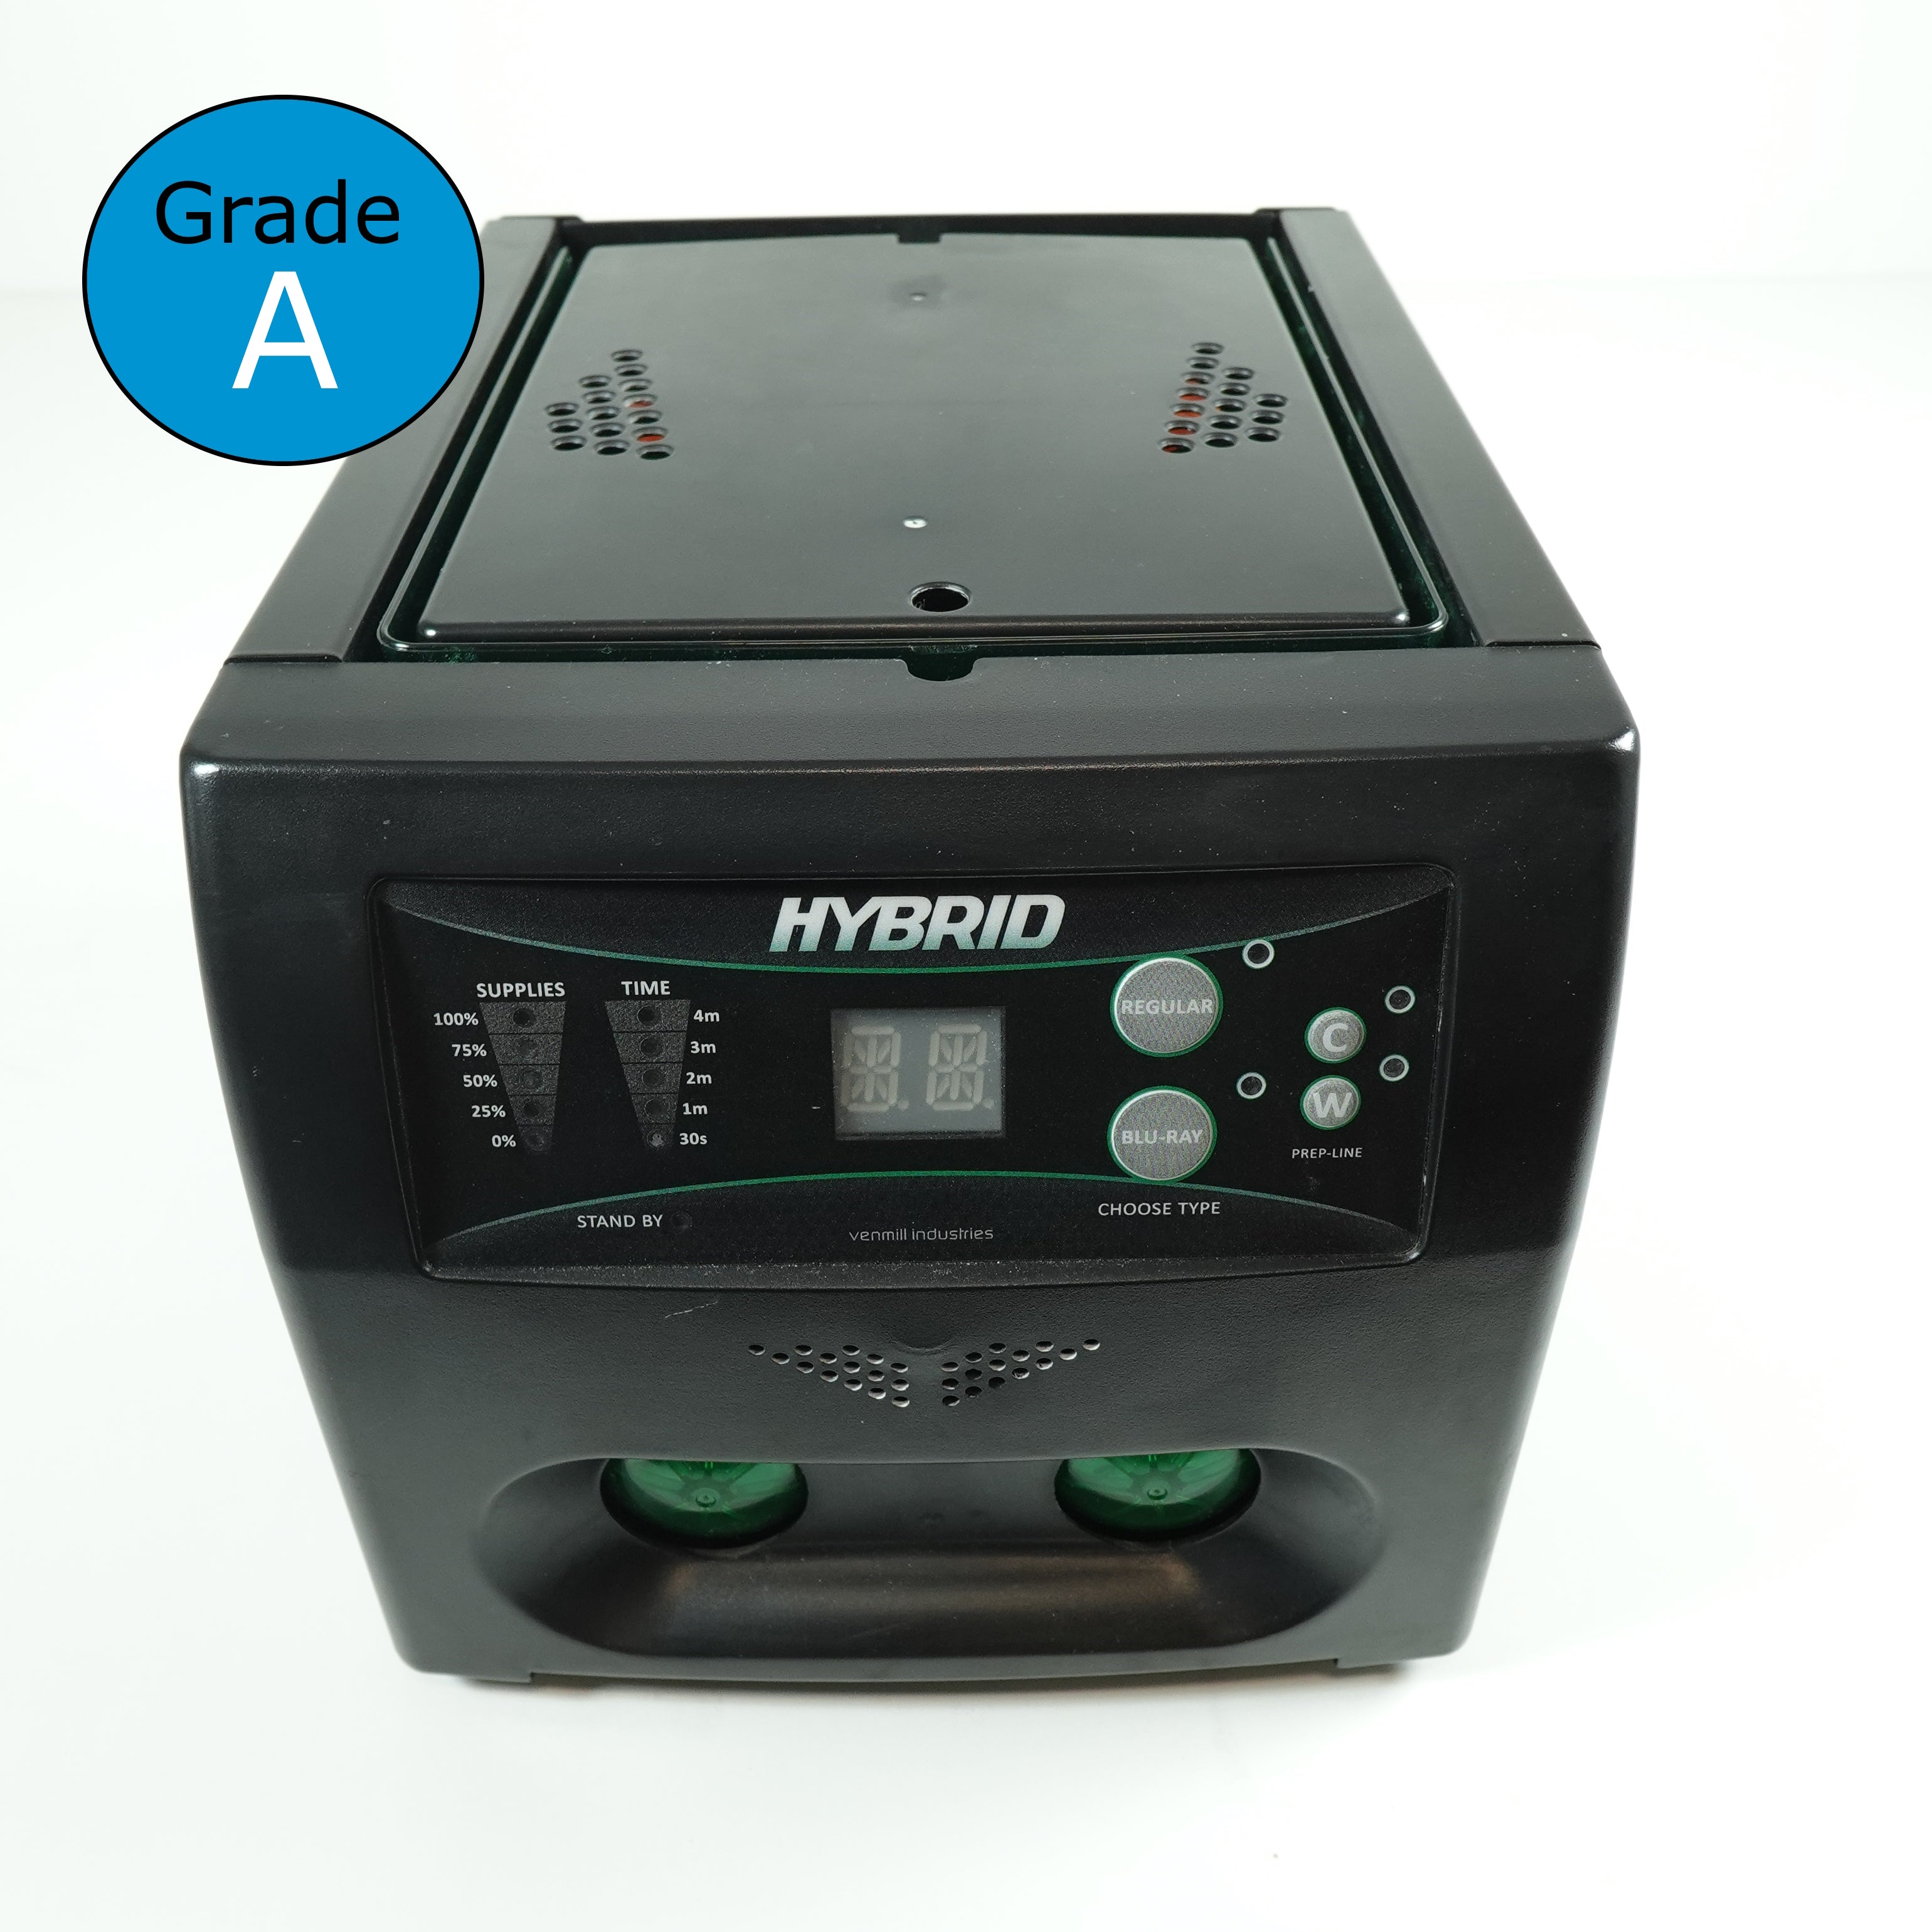 VMI Hybrid 2.0 Machine (Reconditioned) - Grade A